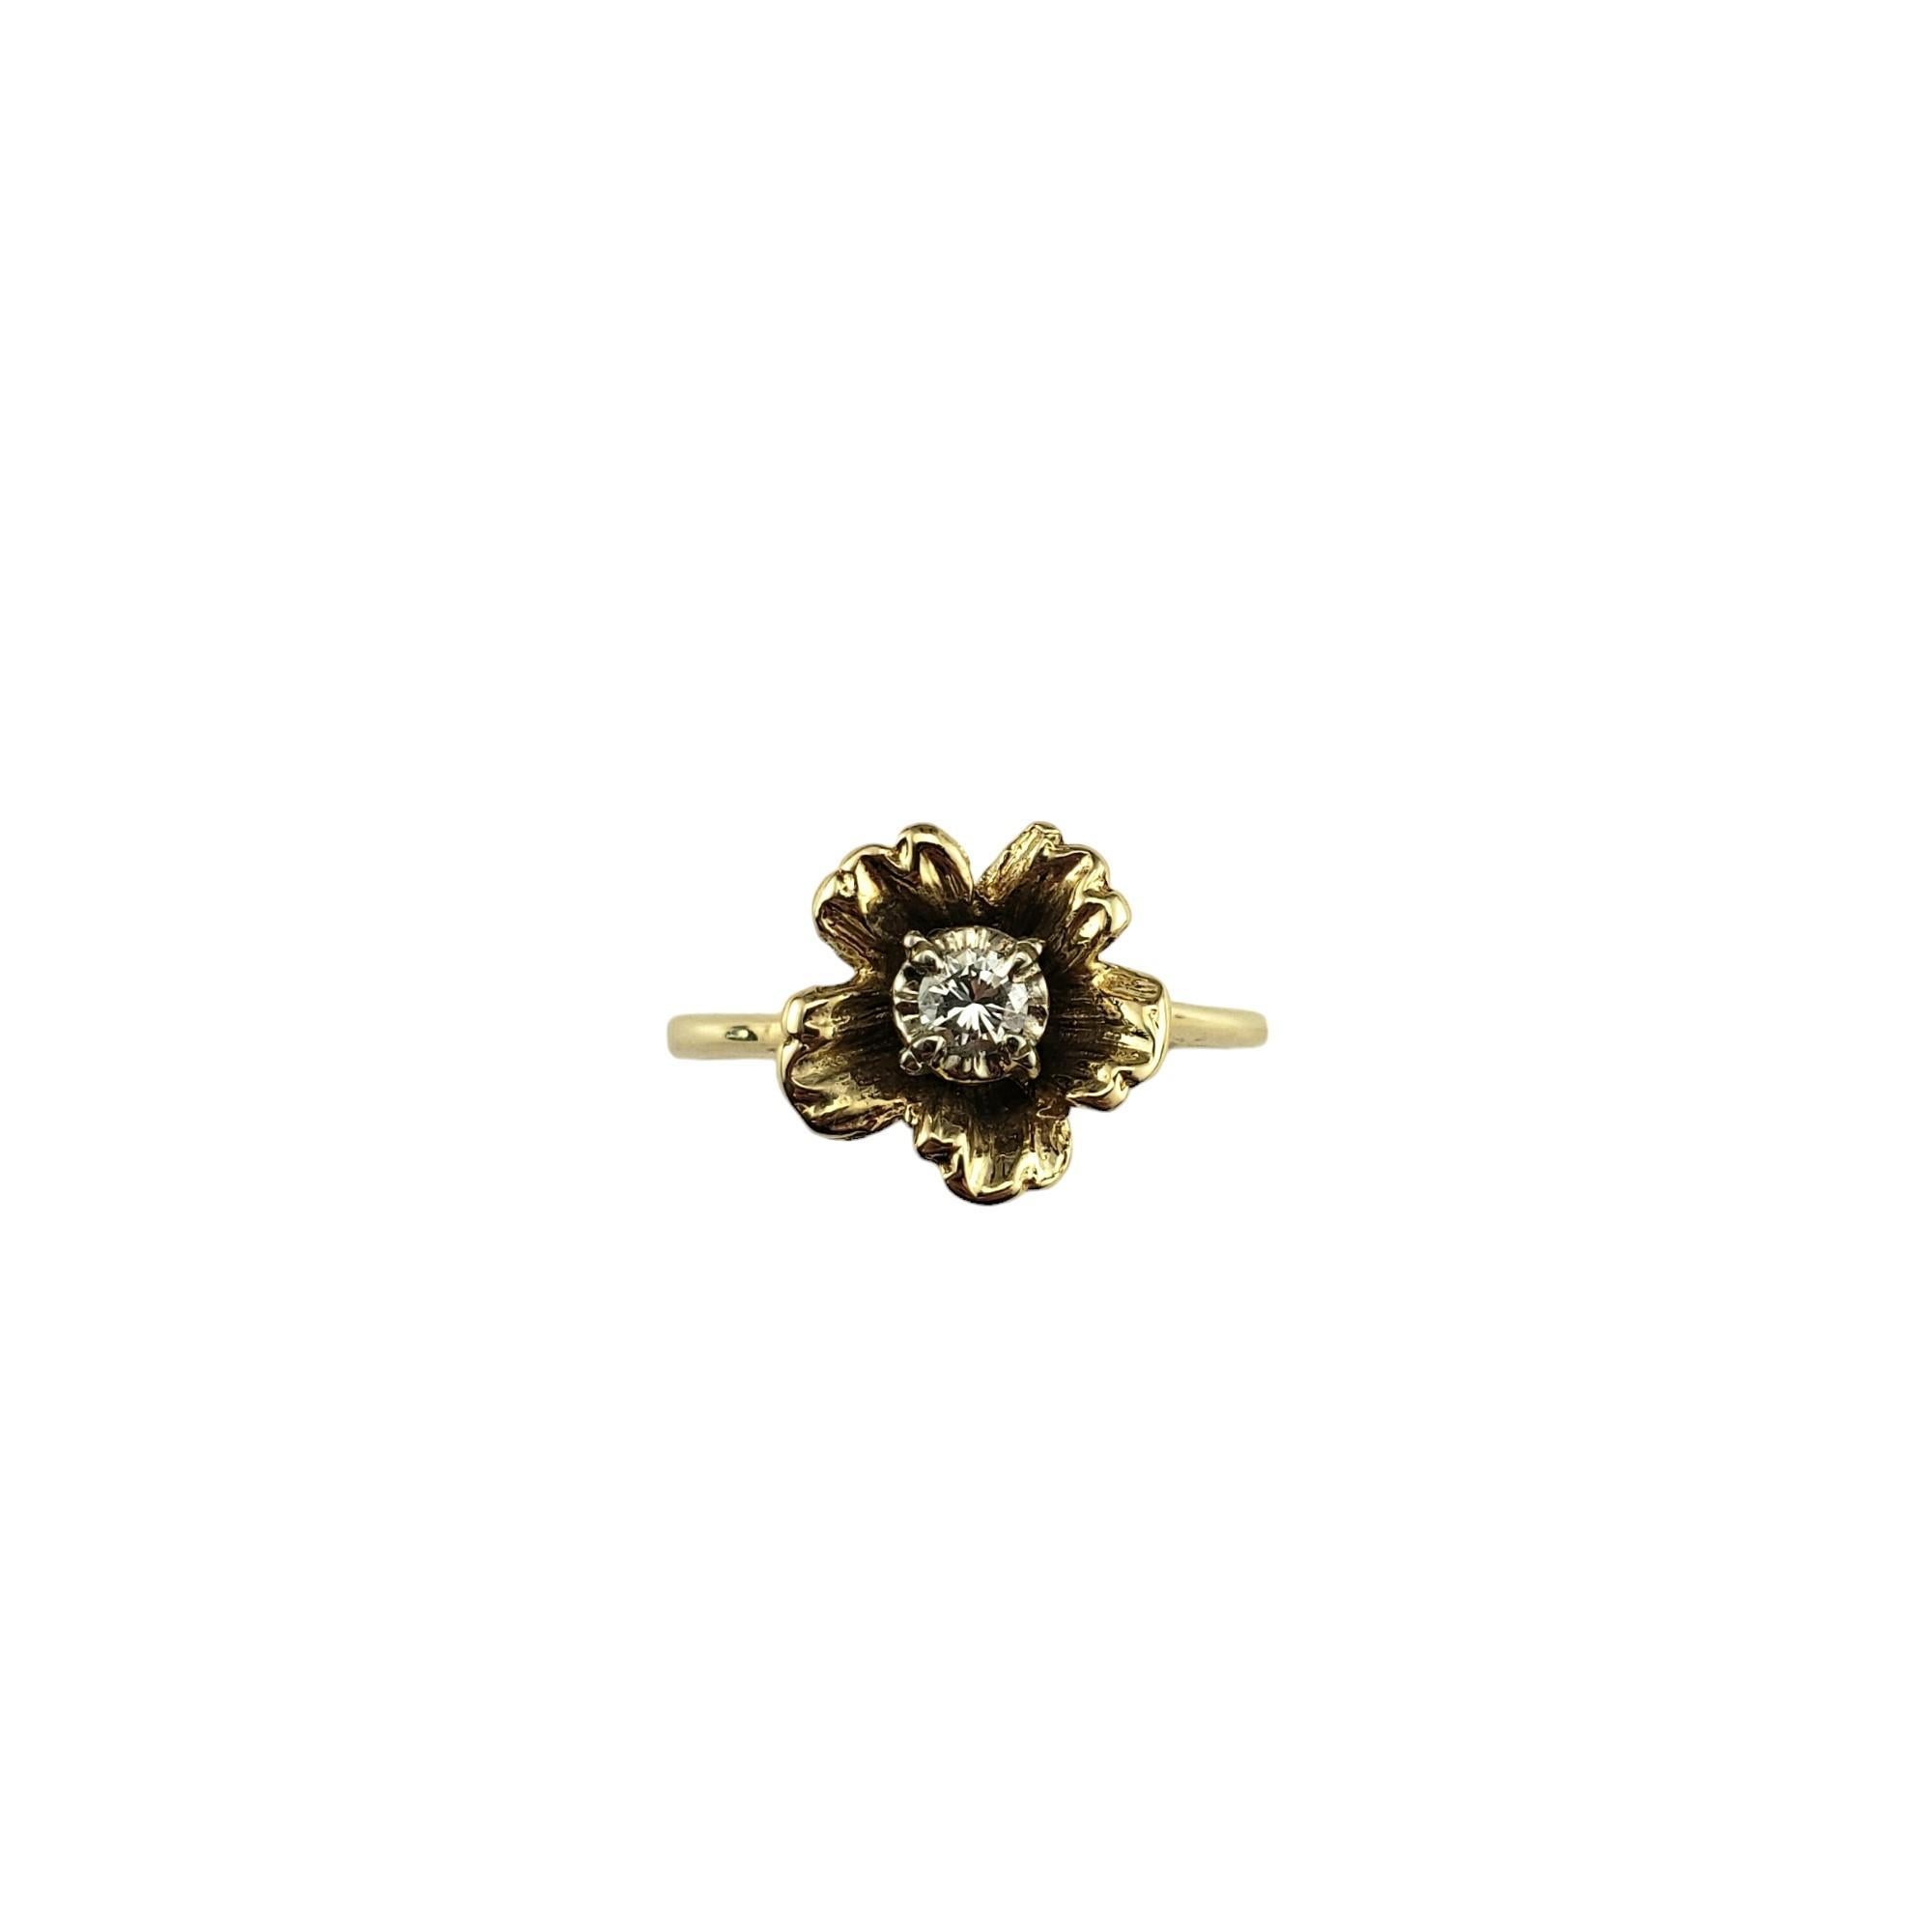 14 Karat Yellow Gold and Diamond Flower Ring Size 8 #16737